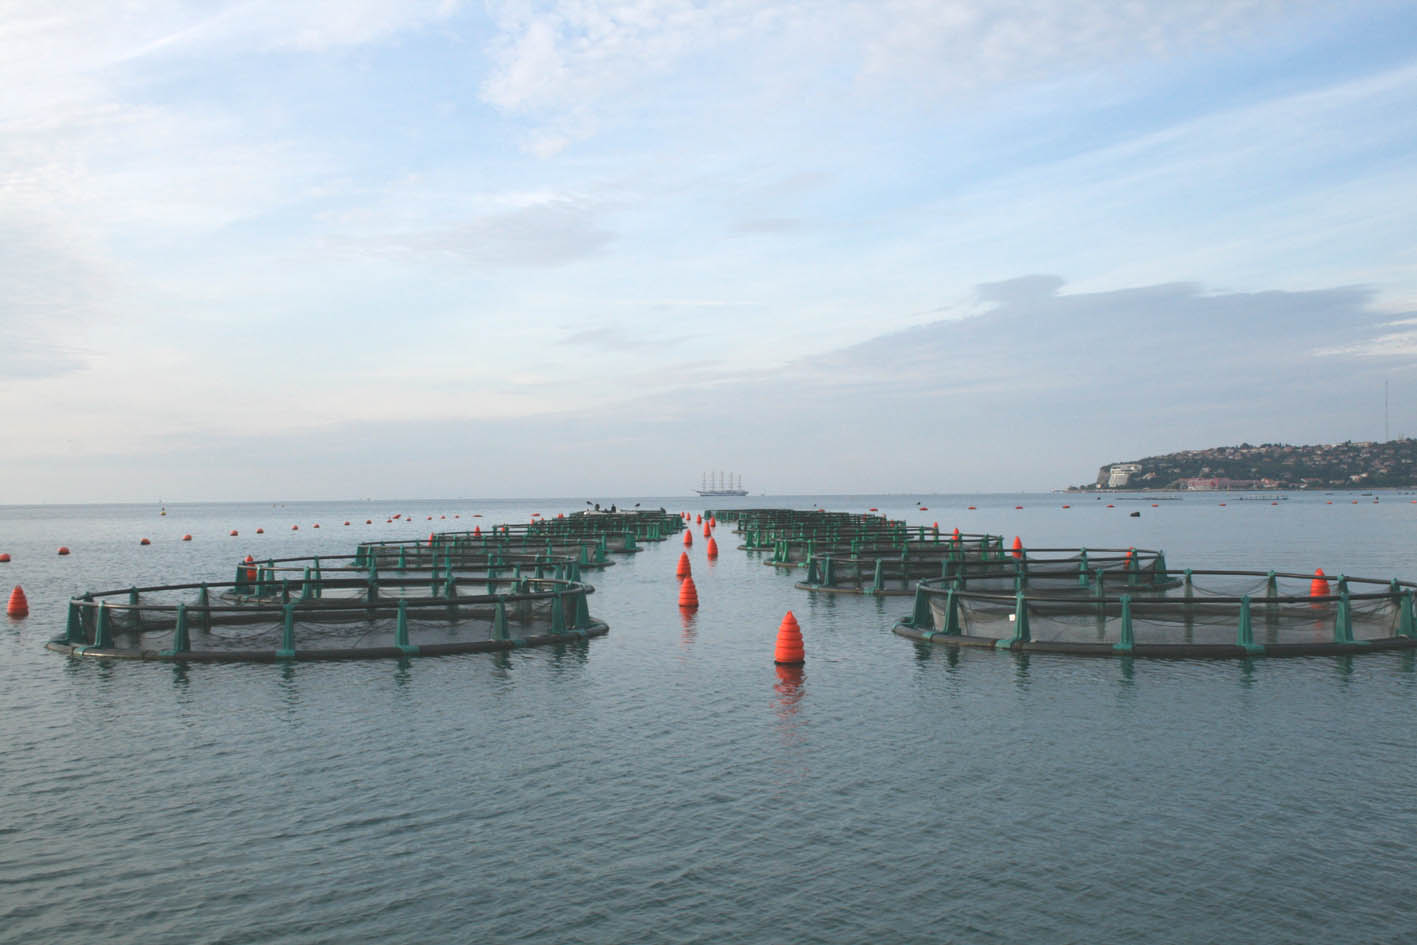 A modern seawater fish farm off the coast of Slovenia.